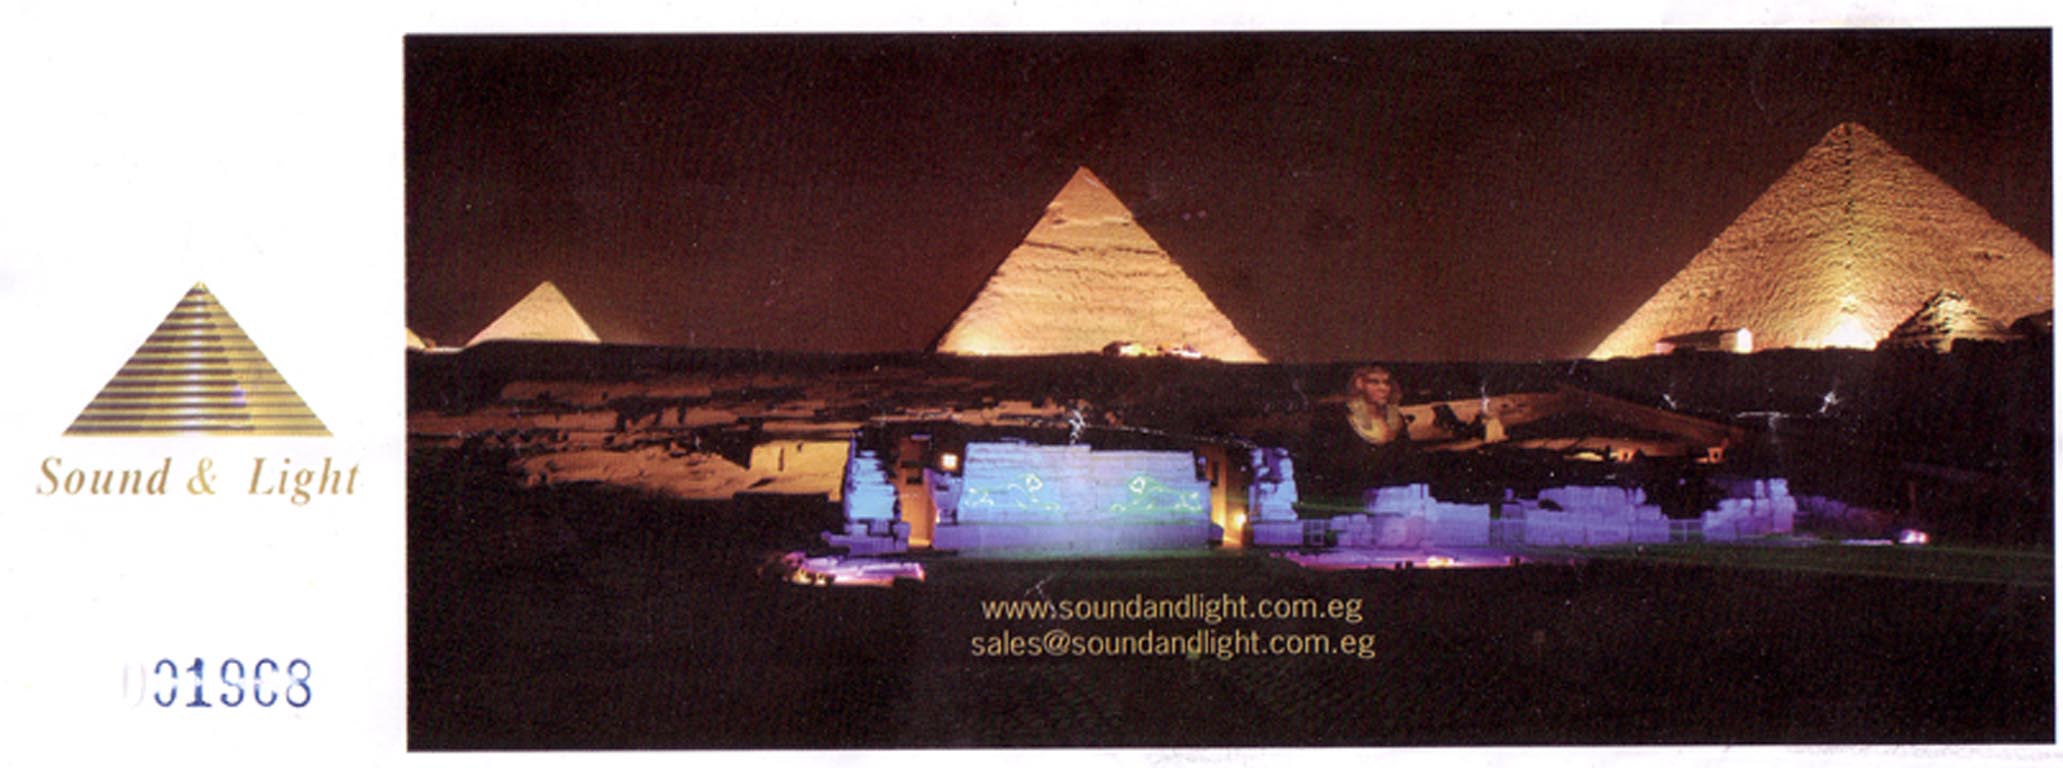 0201 - Ticket-Pyramids Sound & Light